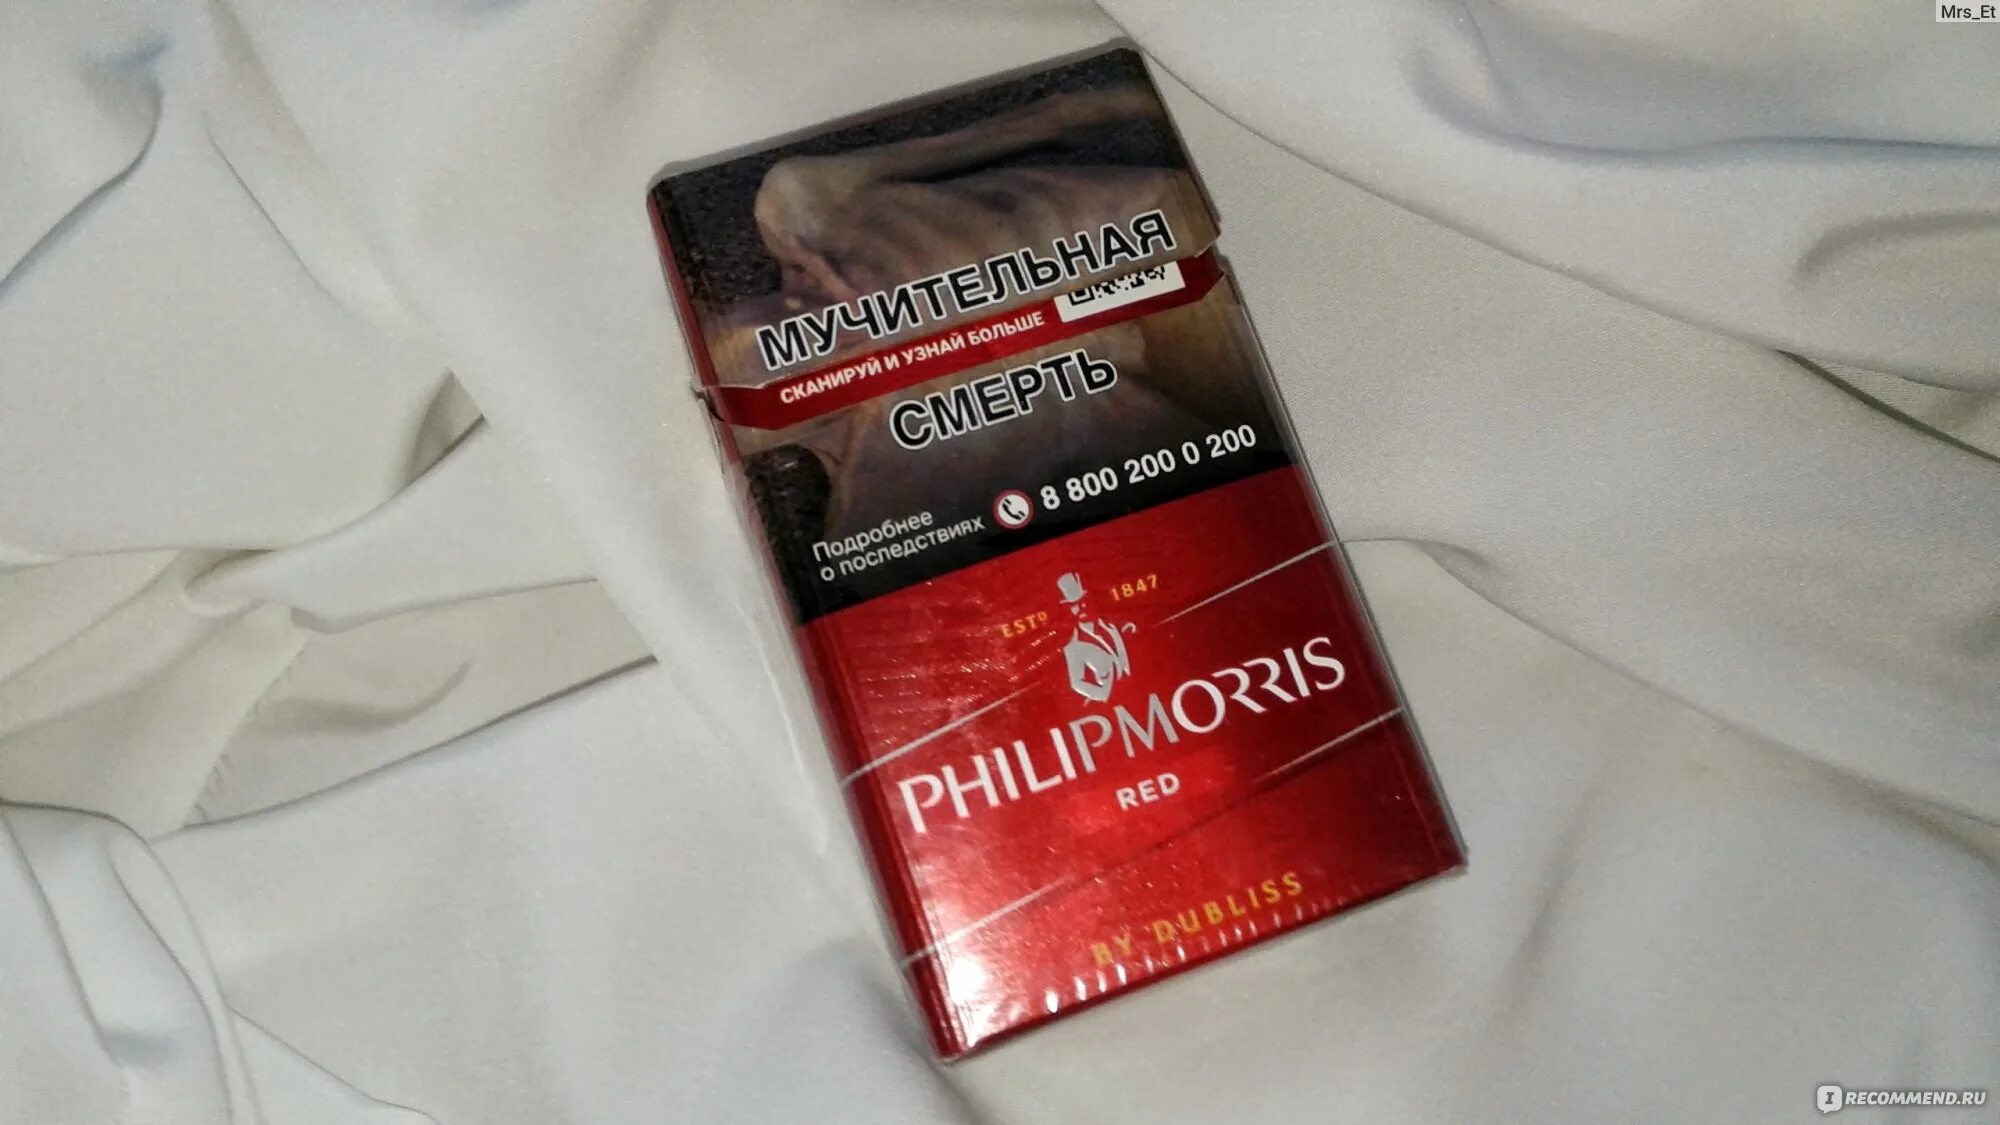 Филипс Морис сигареты красные. Сигареты Филип Моррис ред. Сигареты Philip Morris красный. Филипс Морис красный. Филип моррис красные